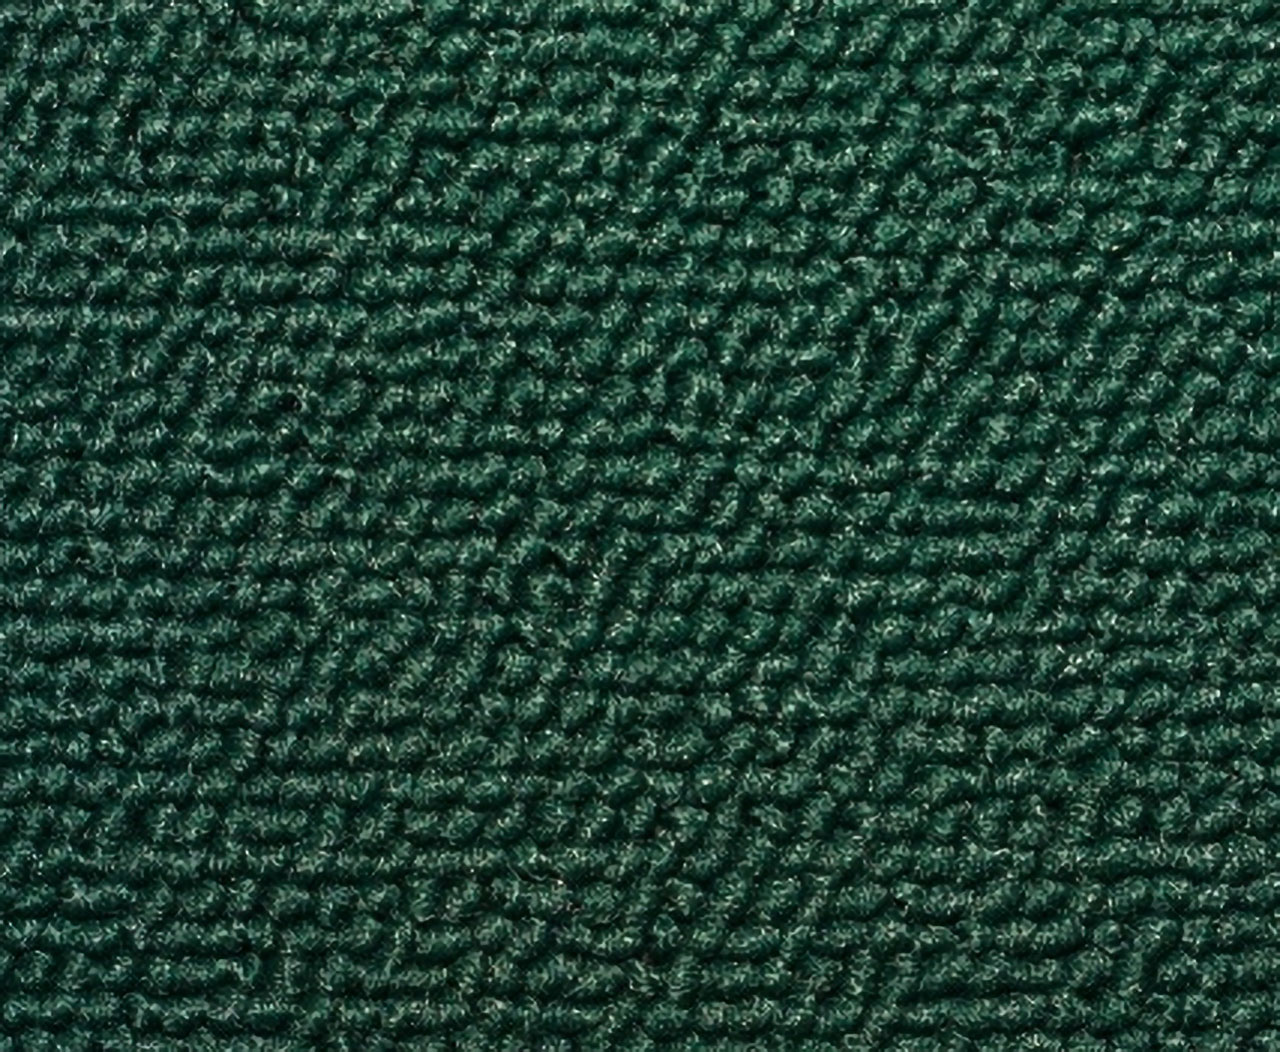 Holden Standard HD Standard Sedan E30 Triton Green Carpet (Image 1 of 1)